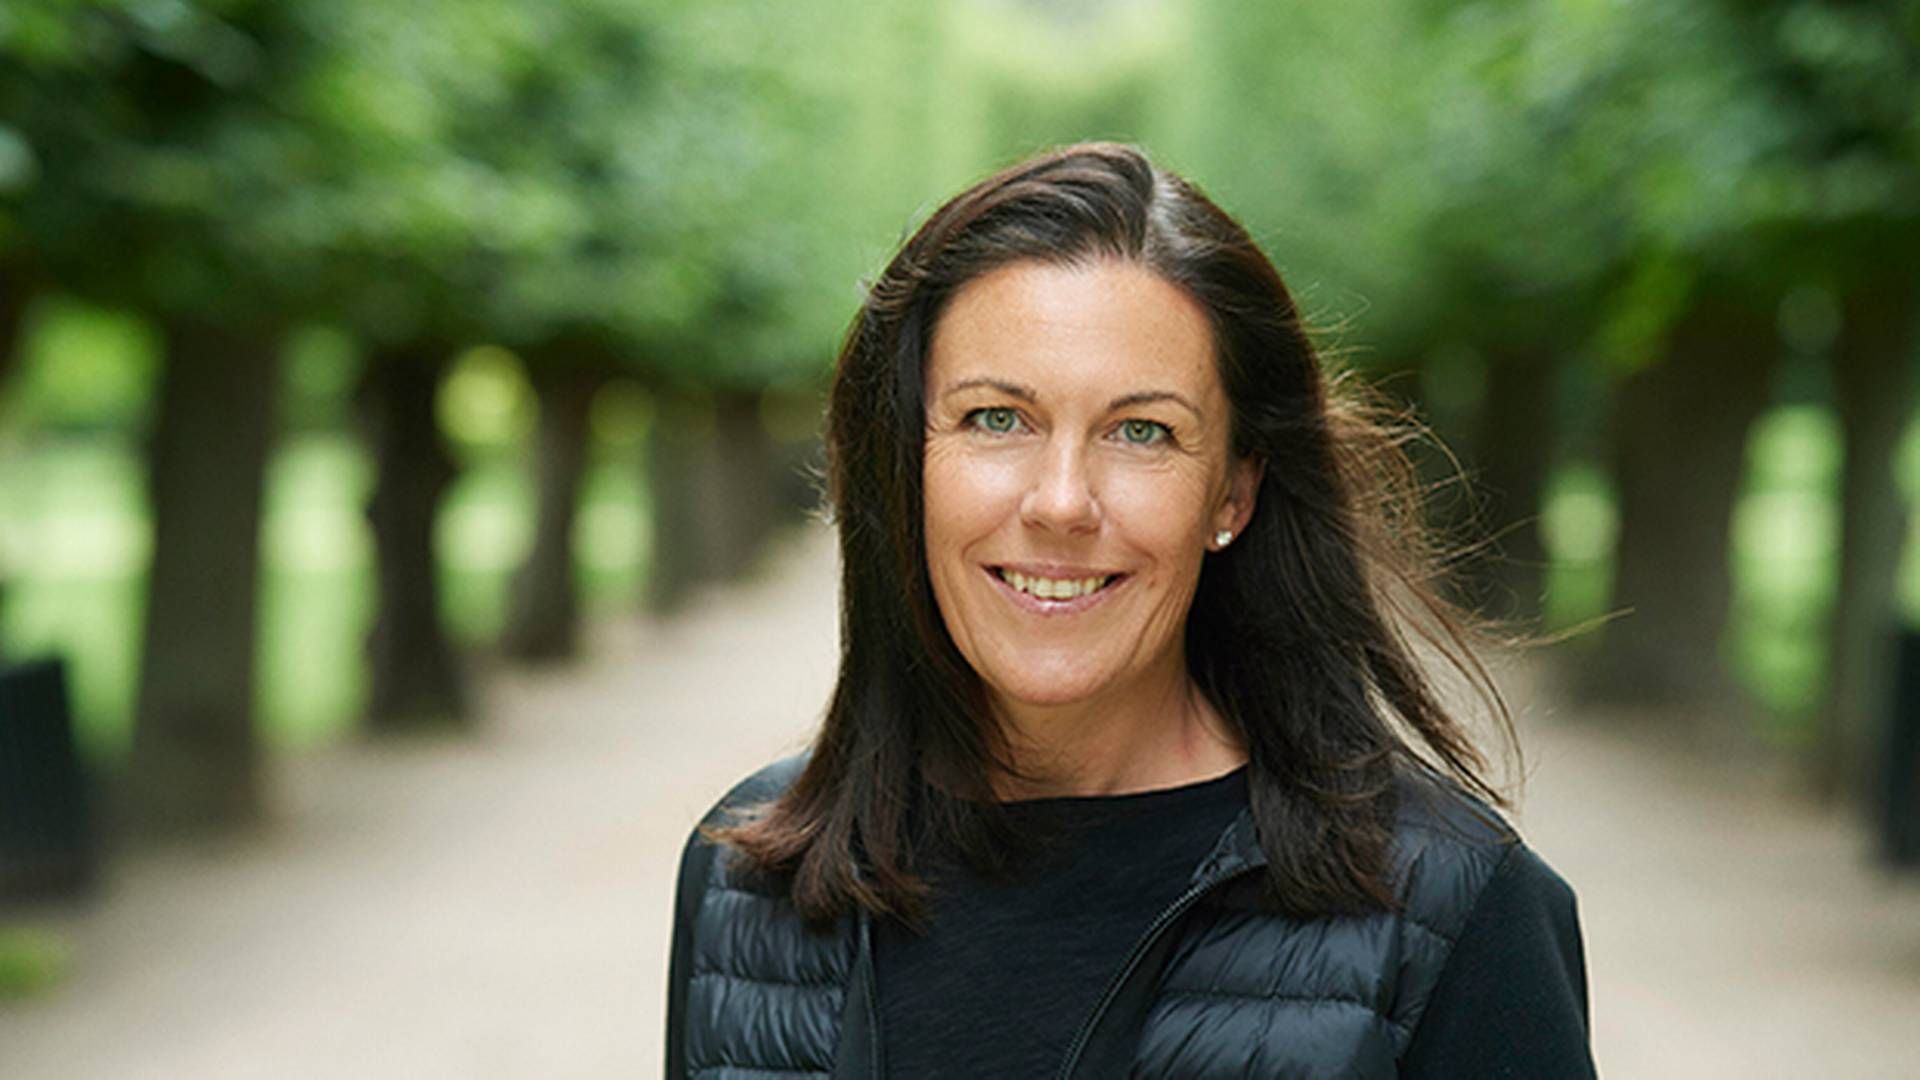 Louise Hahn (foto) er ny topchef for Energi Danmark og slår gode takter an i sit tiltrædelsesinterview, men k-opgaven fremadrettet er stor, vurderer rådgivere. | Foto: Energi Danmark / PR